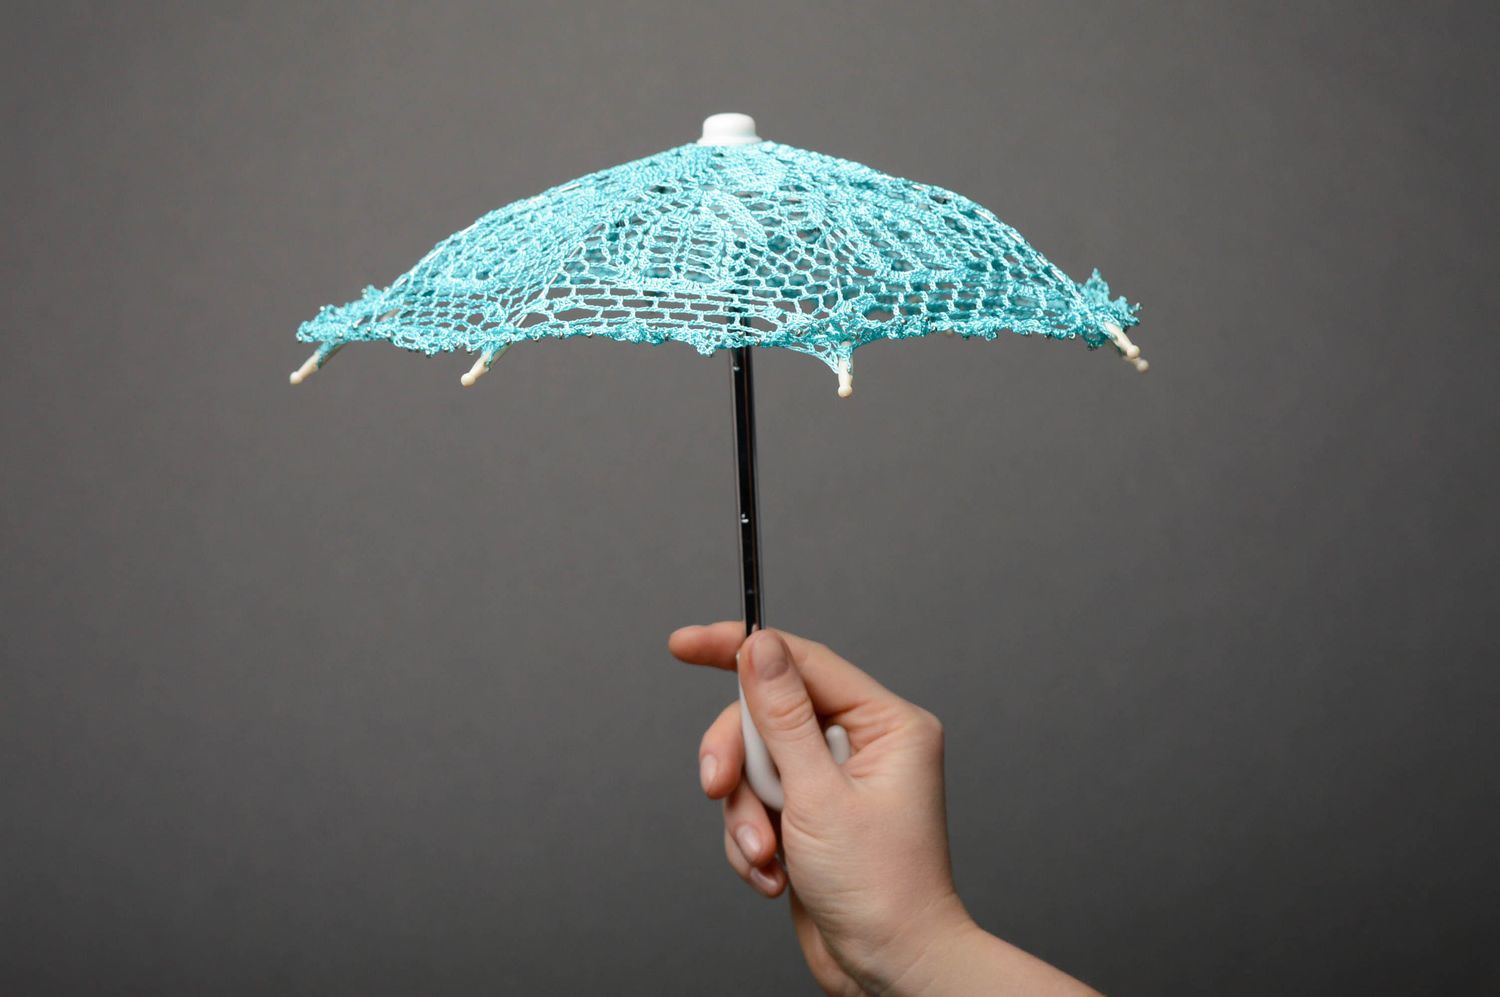 Crochet decorative umbrella photo 3